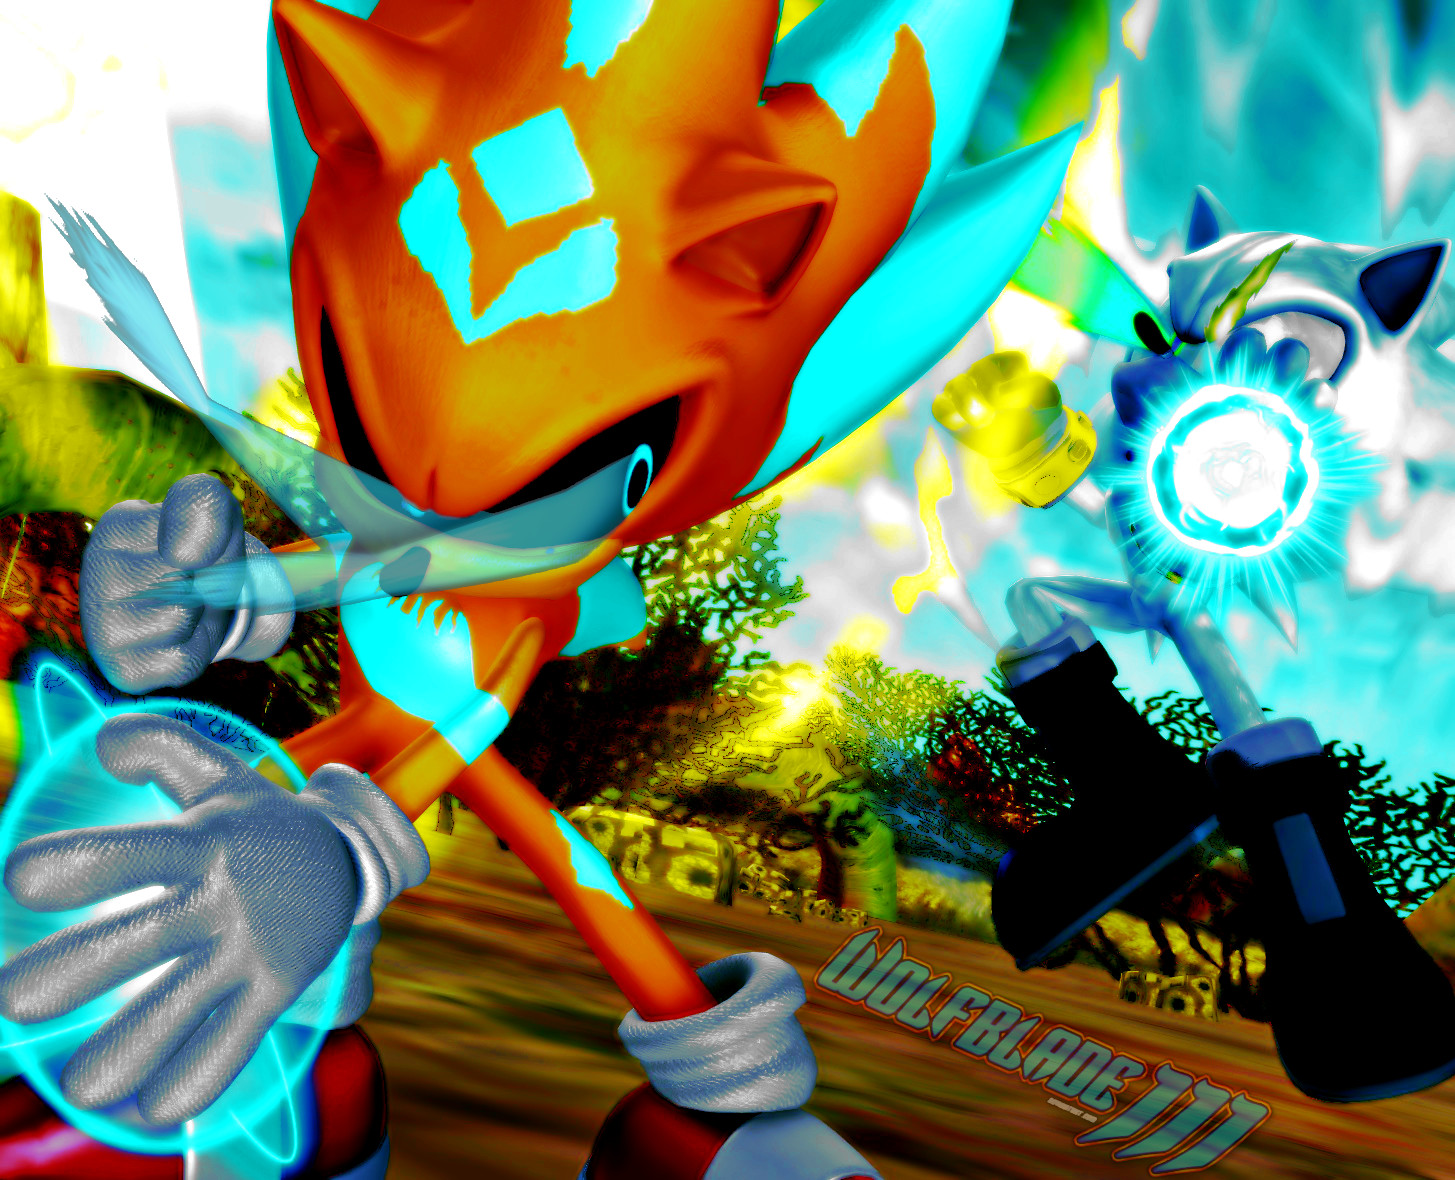 Hyper Sonic vs Super Mecha Sonic by WOLFBLADE111 on DeviantArt